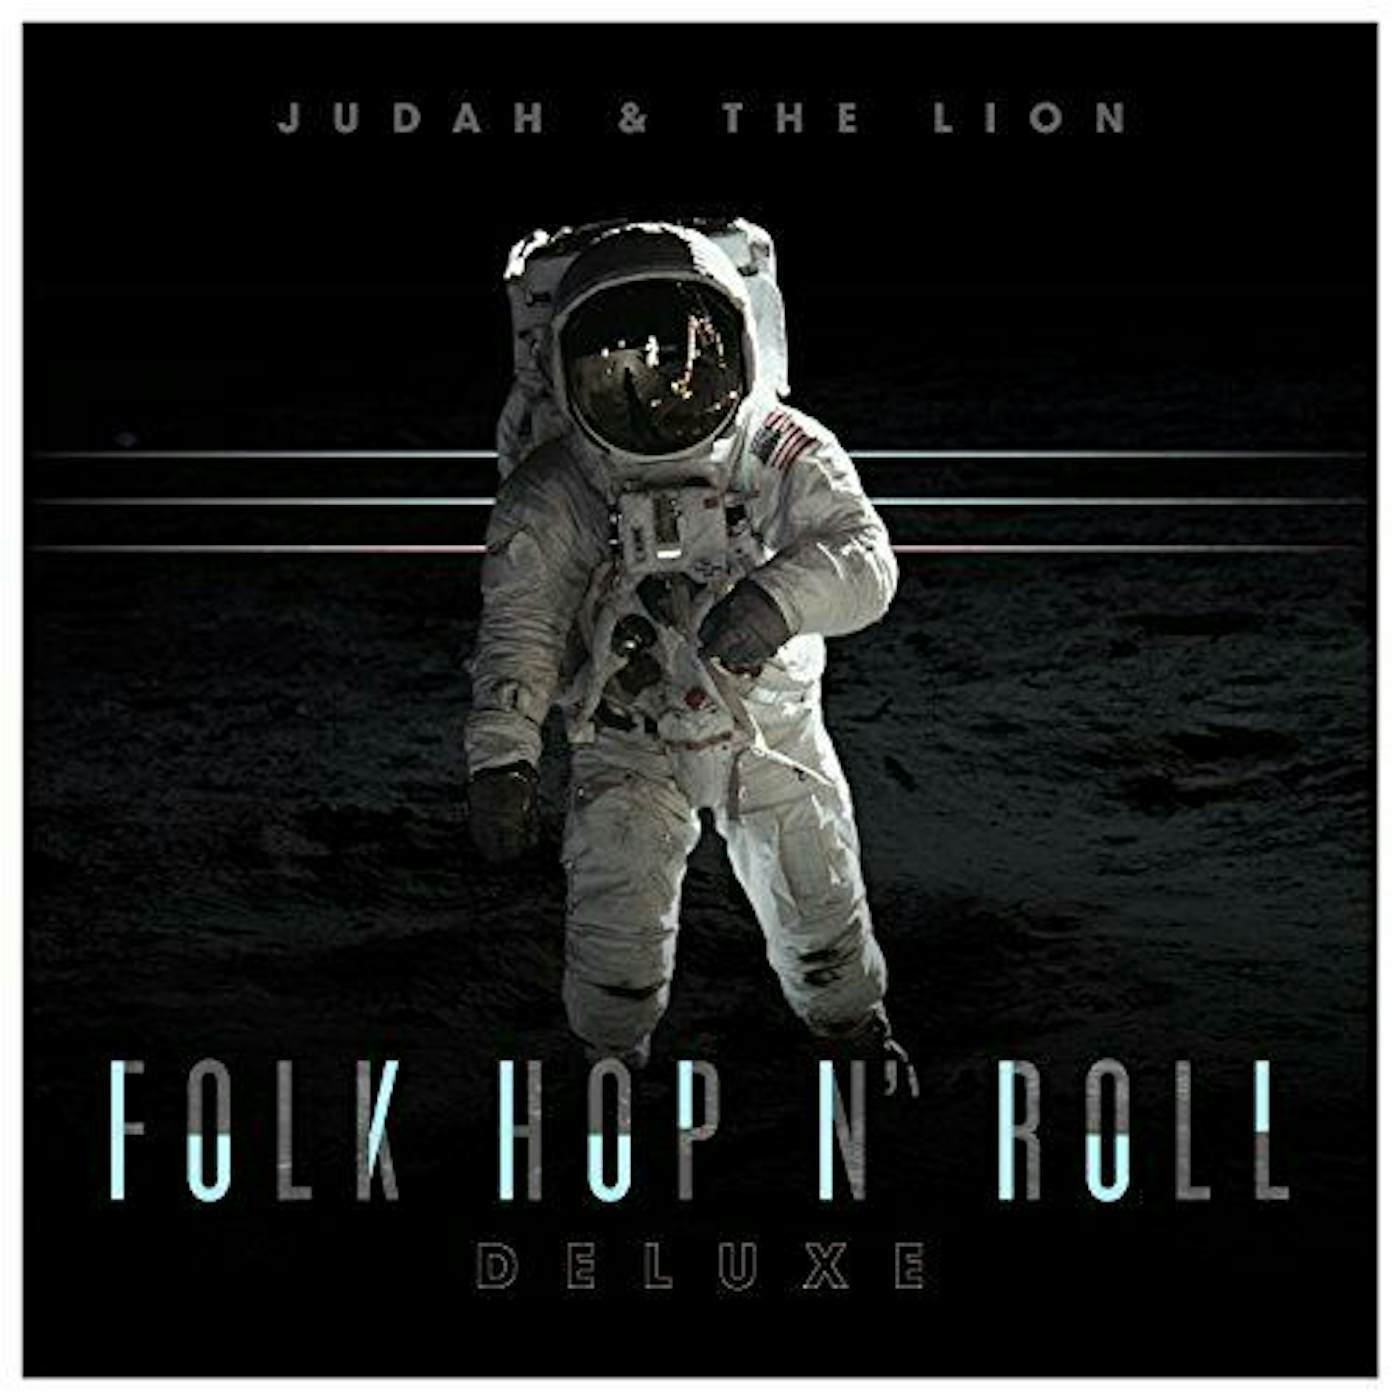 Judah & the Lion FOLK HOP N' ROLL [2 LP][DELUXE EDITION] Vinyl Record